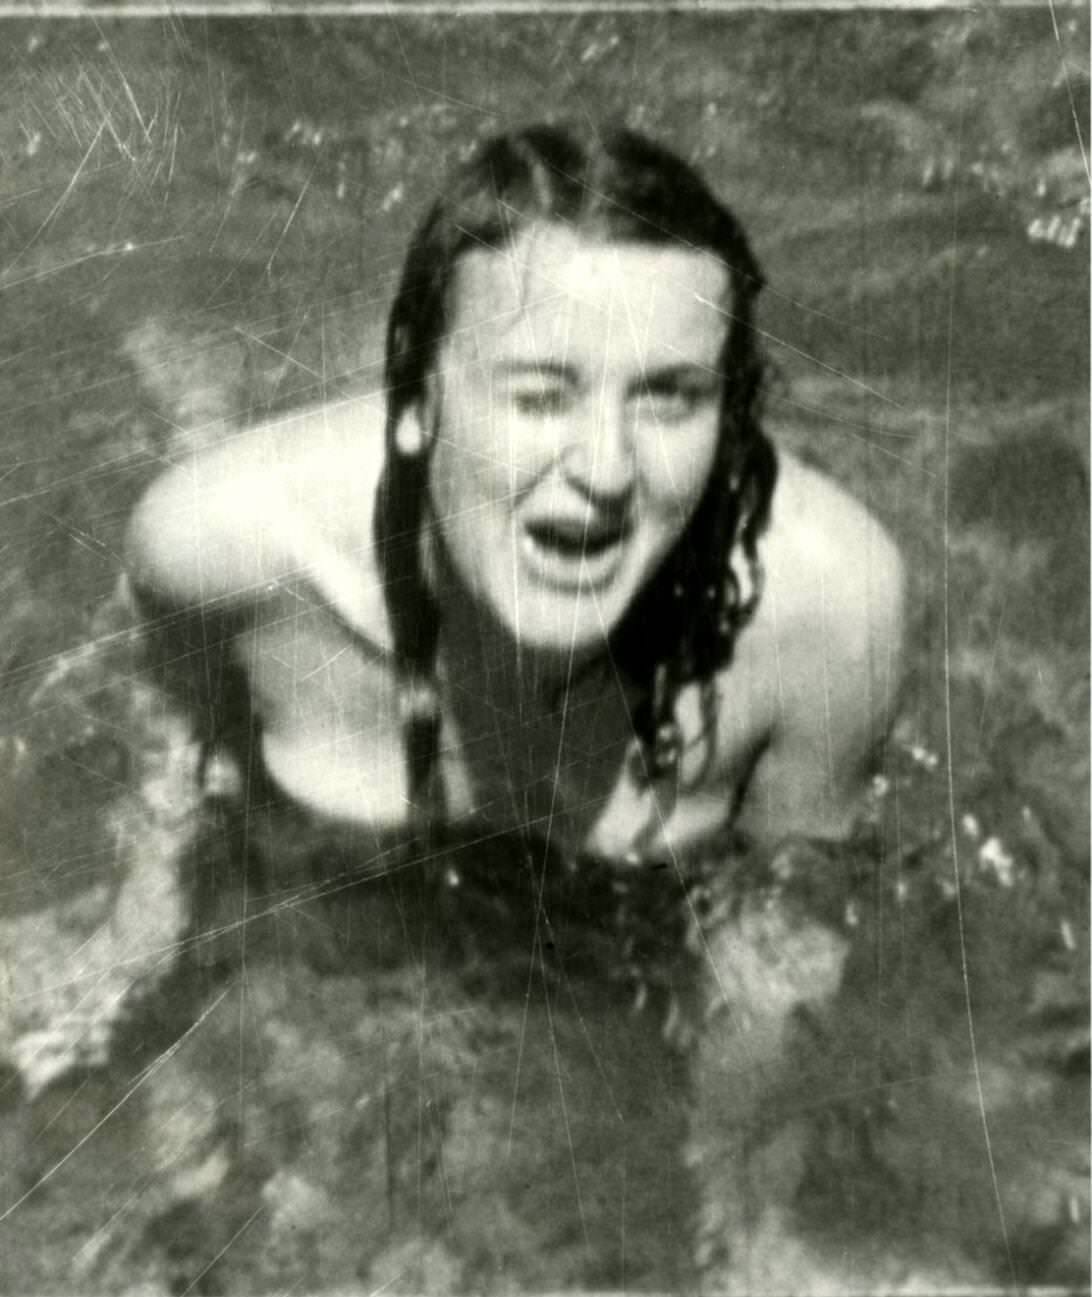 Eva Braun bathing in a phot, 1936